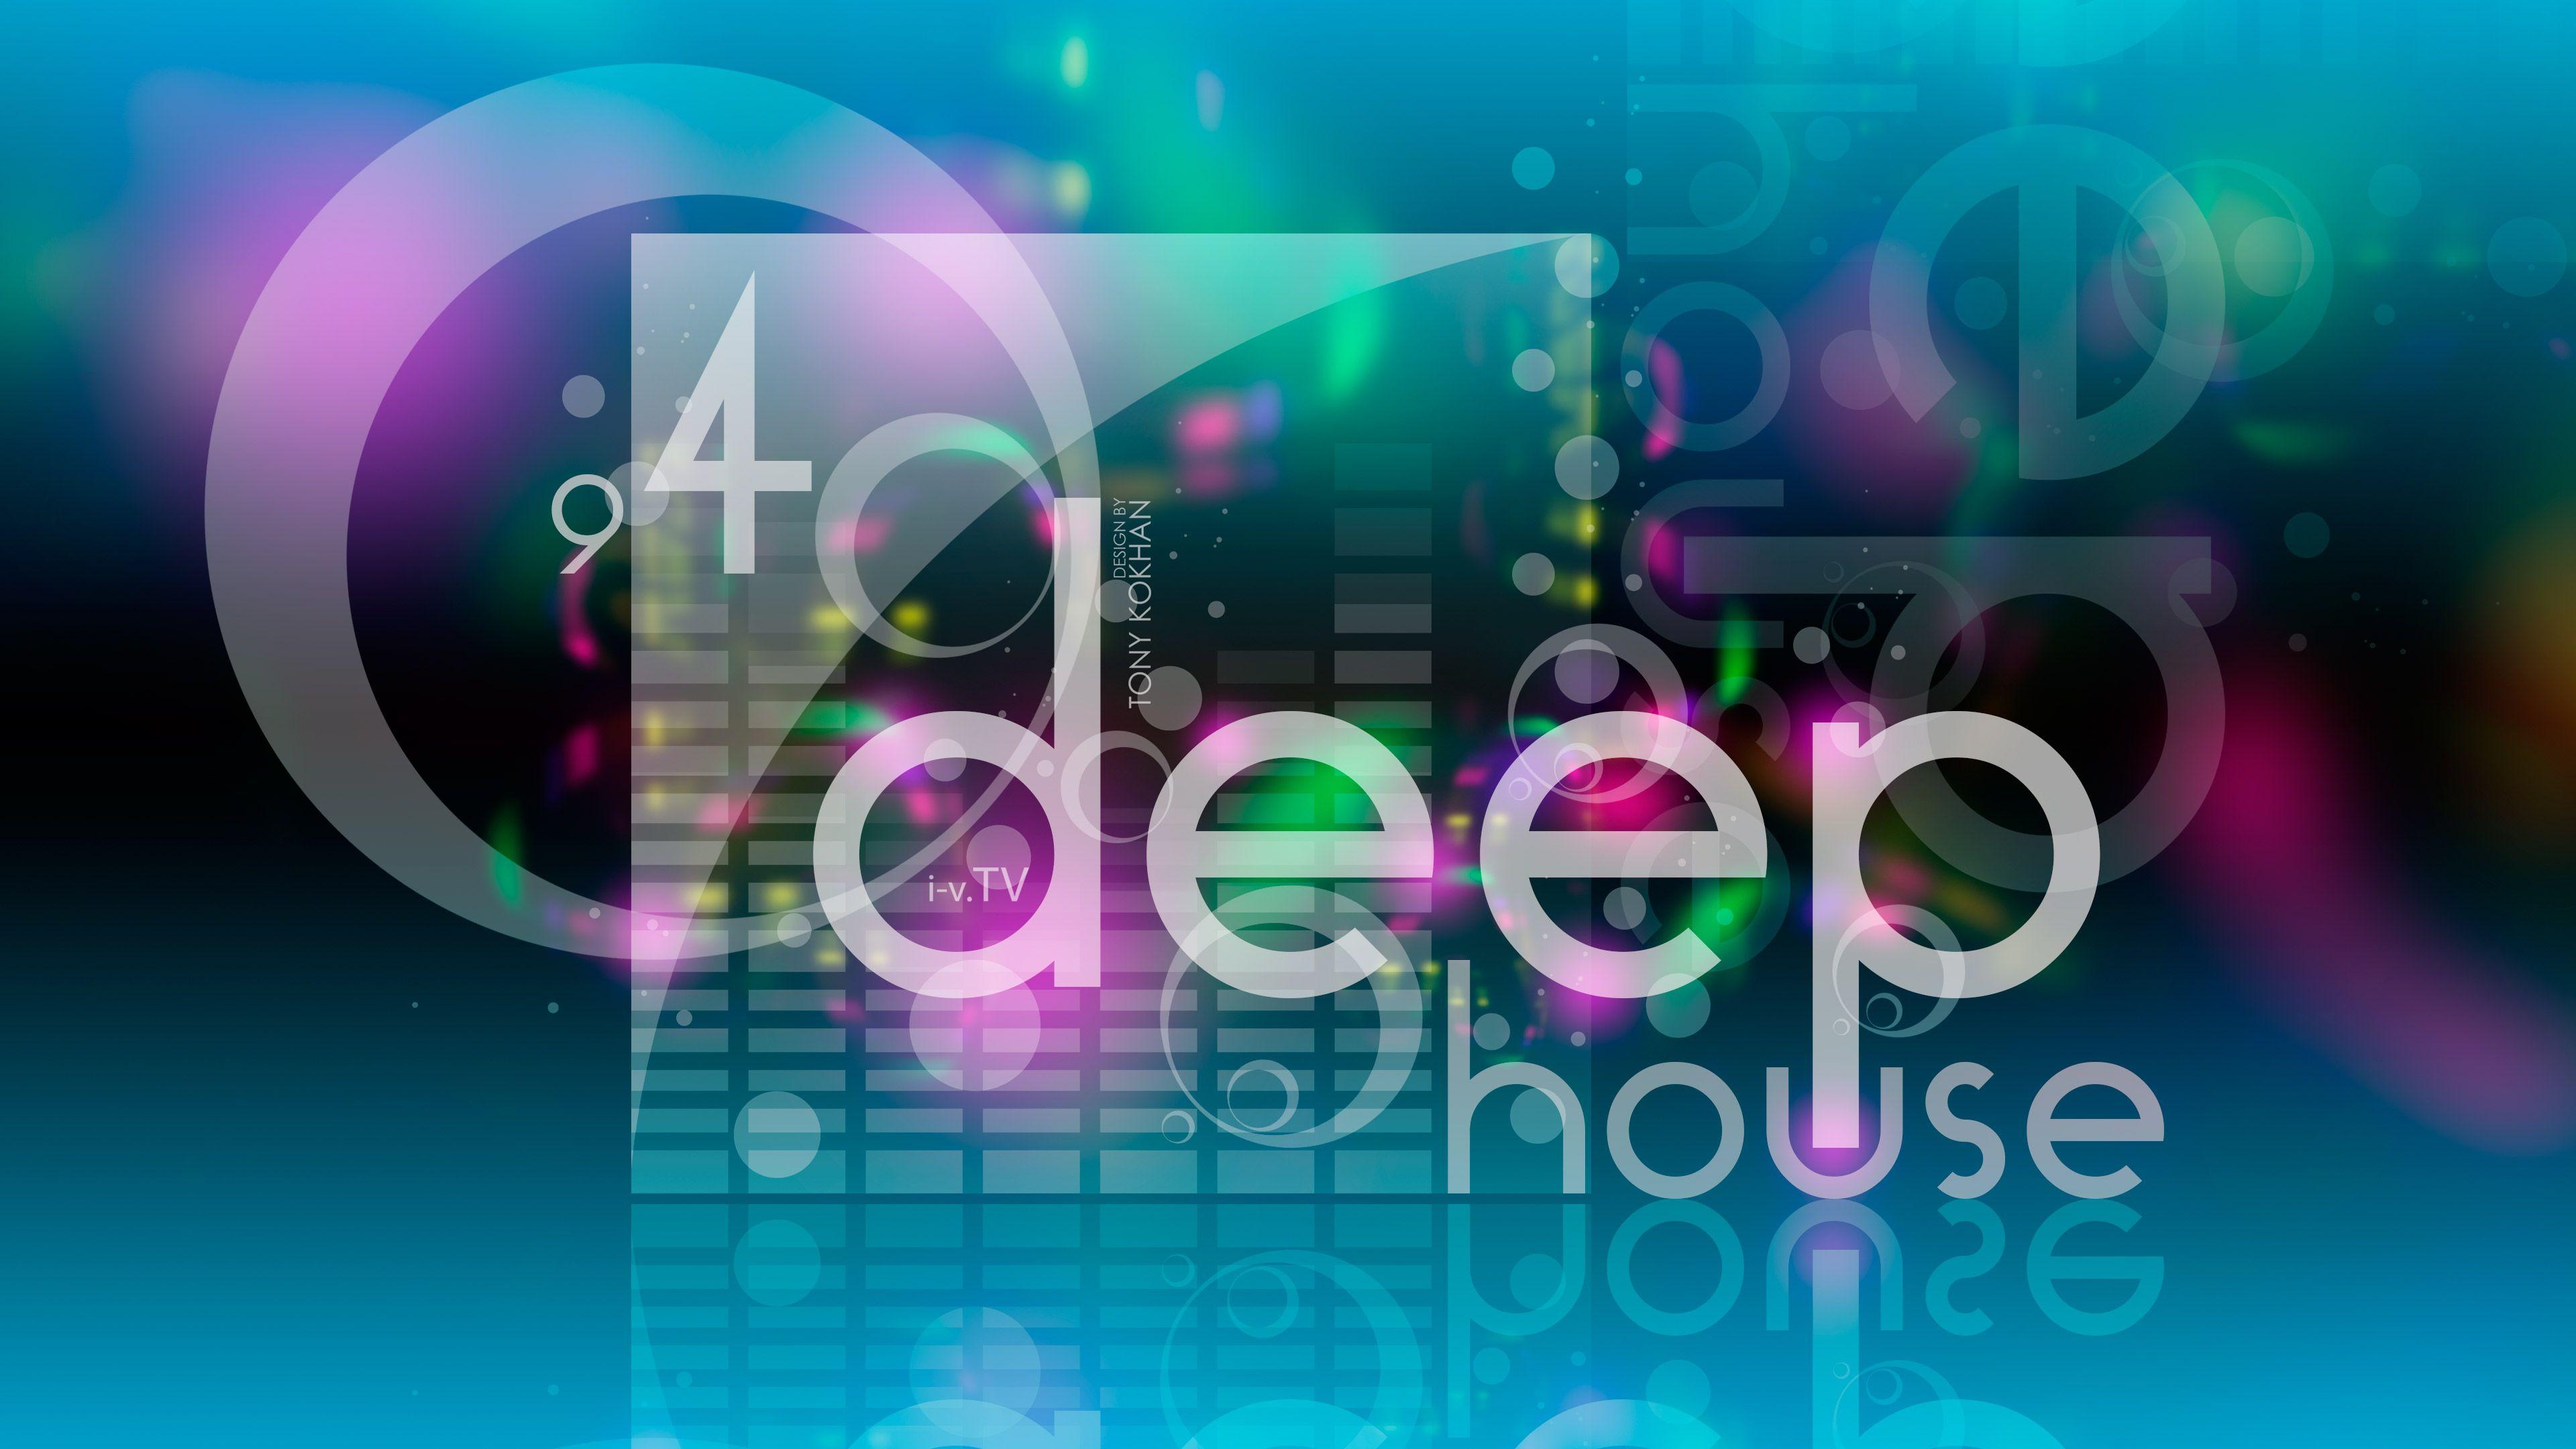 Deep House Music eQ SC Ninety Three 2016 Sound Wallpaper 4K